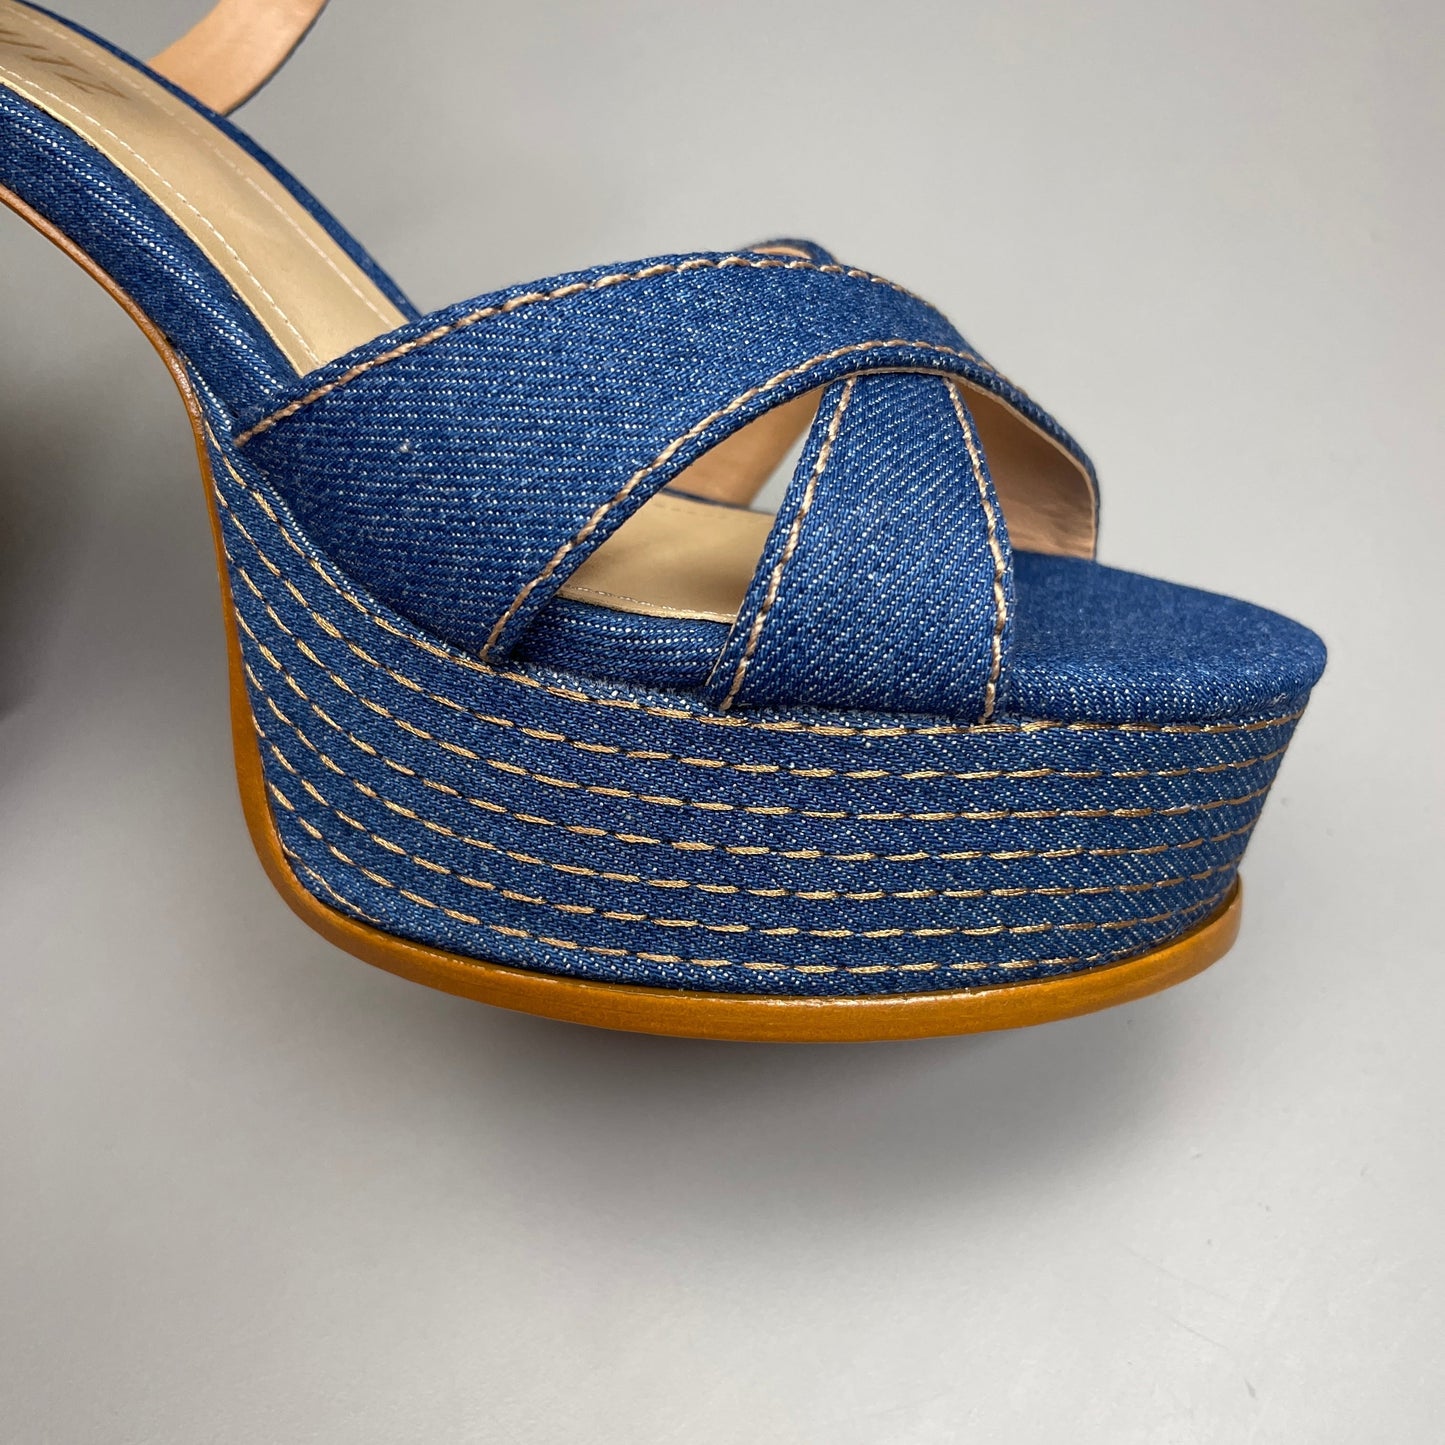 SCHUTZ Keefa Casual Denim Women's 4" Heeled Sandal Platform Blue Sz 7.5B (New)